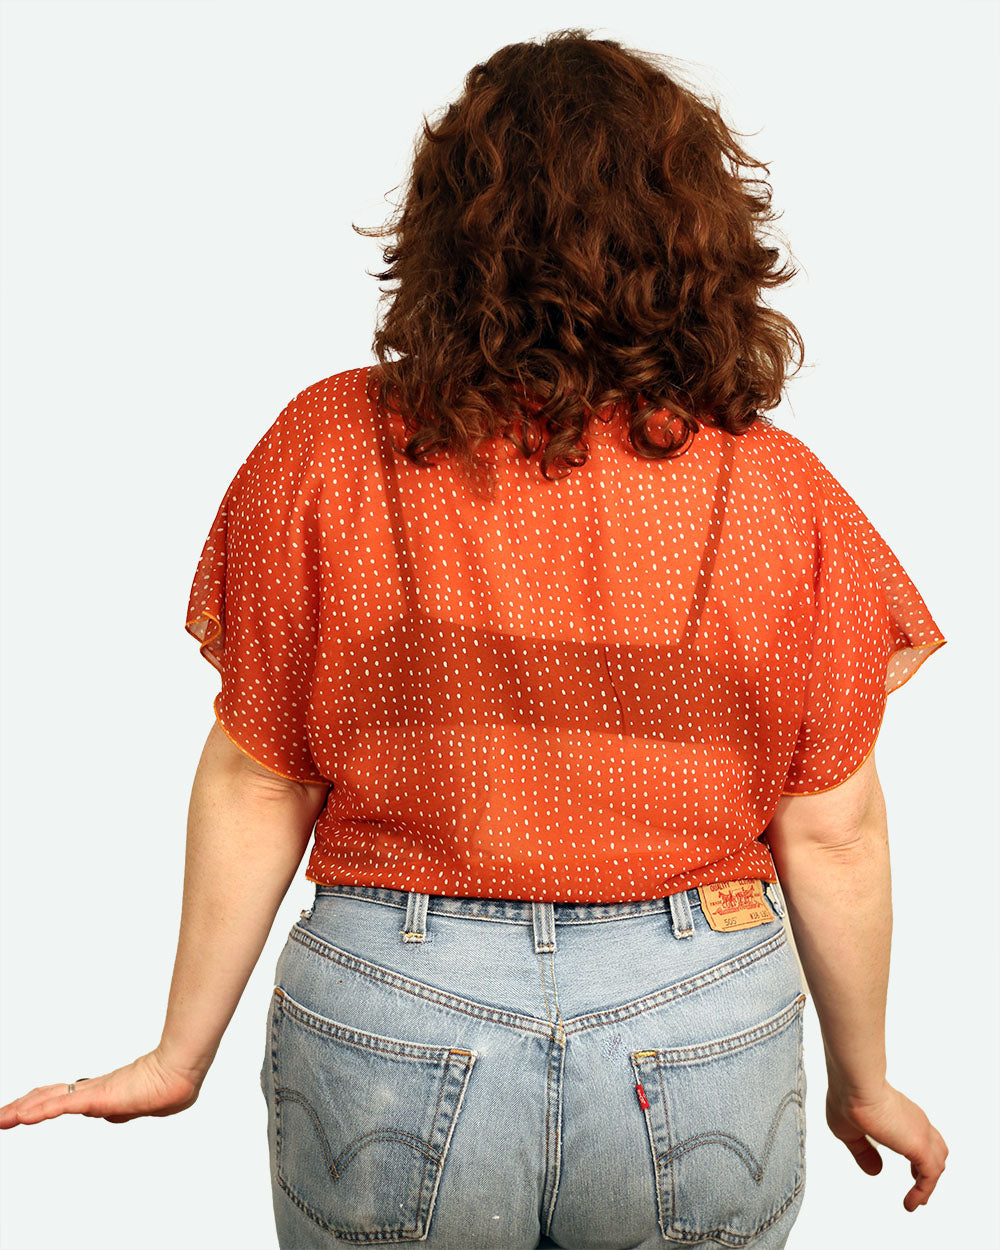 Crop Top in Orange Speckled Sheer